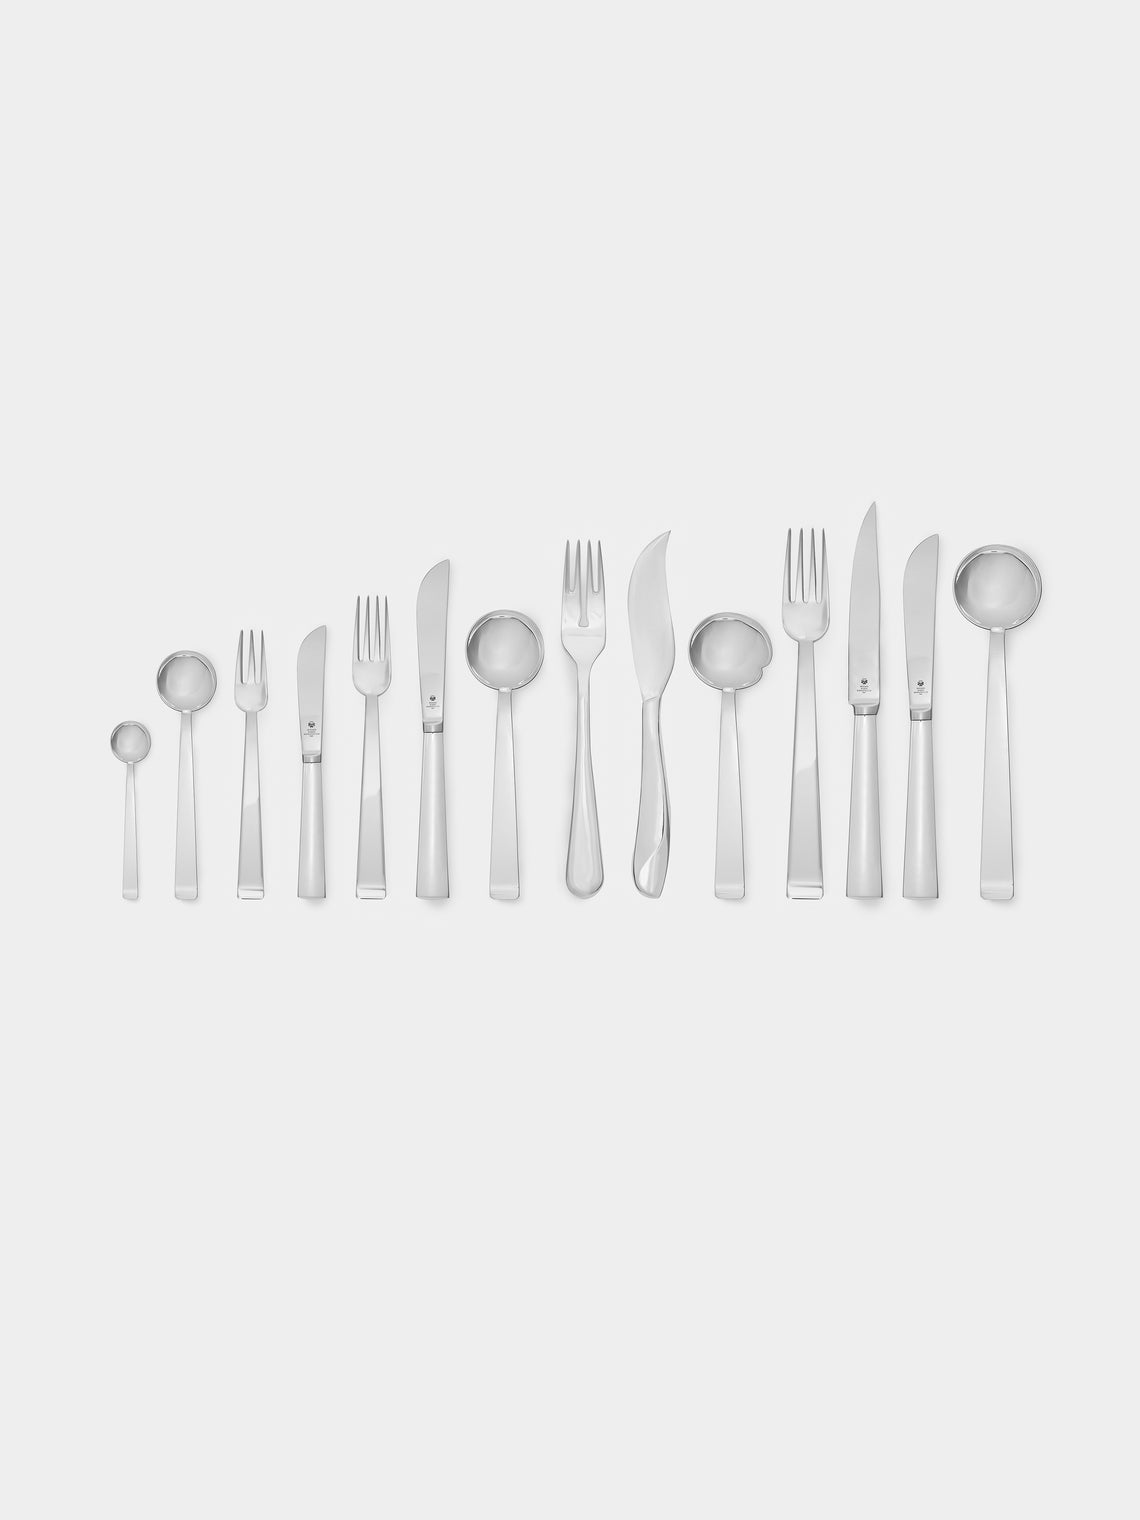 Wiener Silber Manufactur - Josef Hoffmann 135 Silver-Plated Dinner Knife - Silver - ABASK